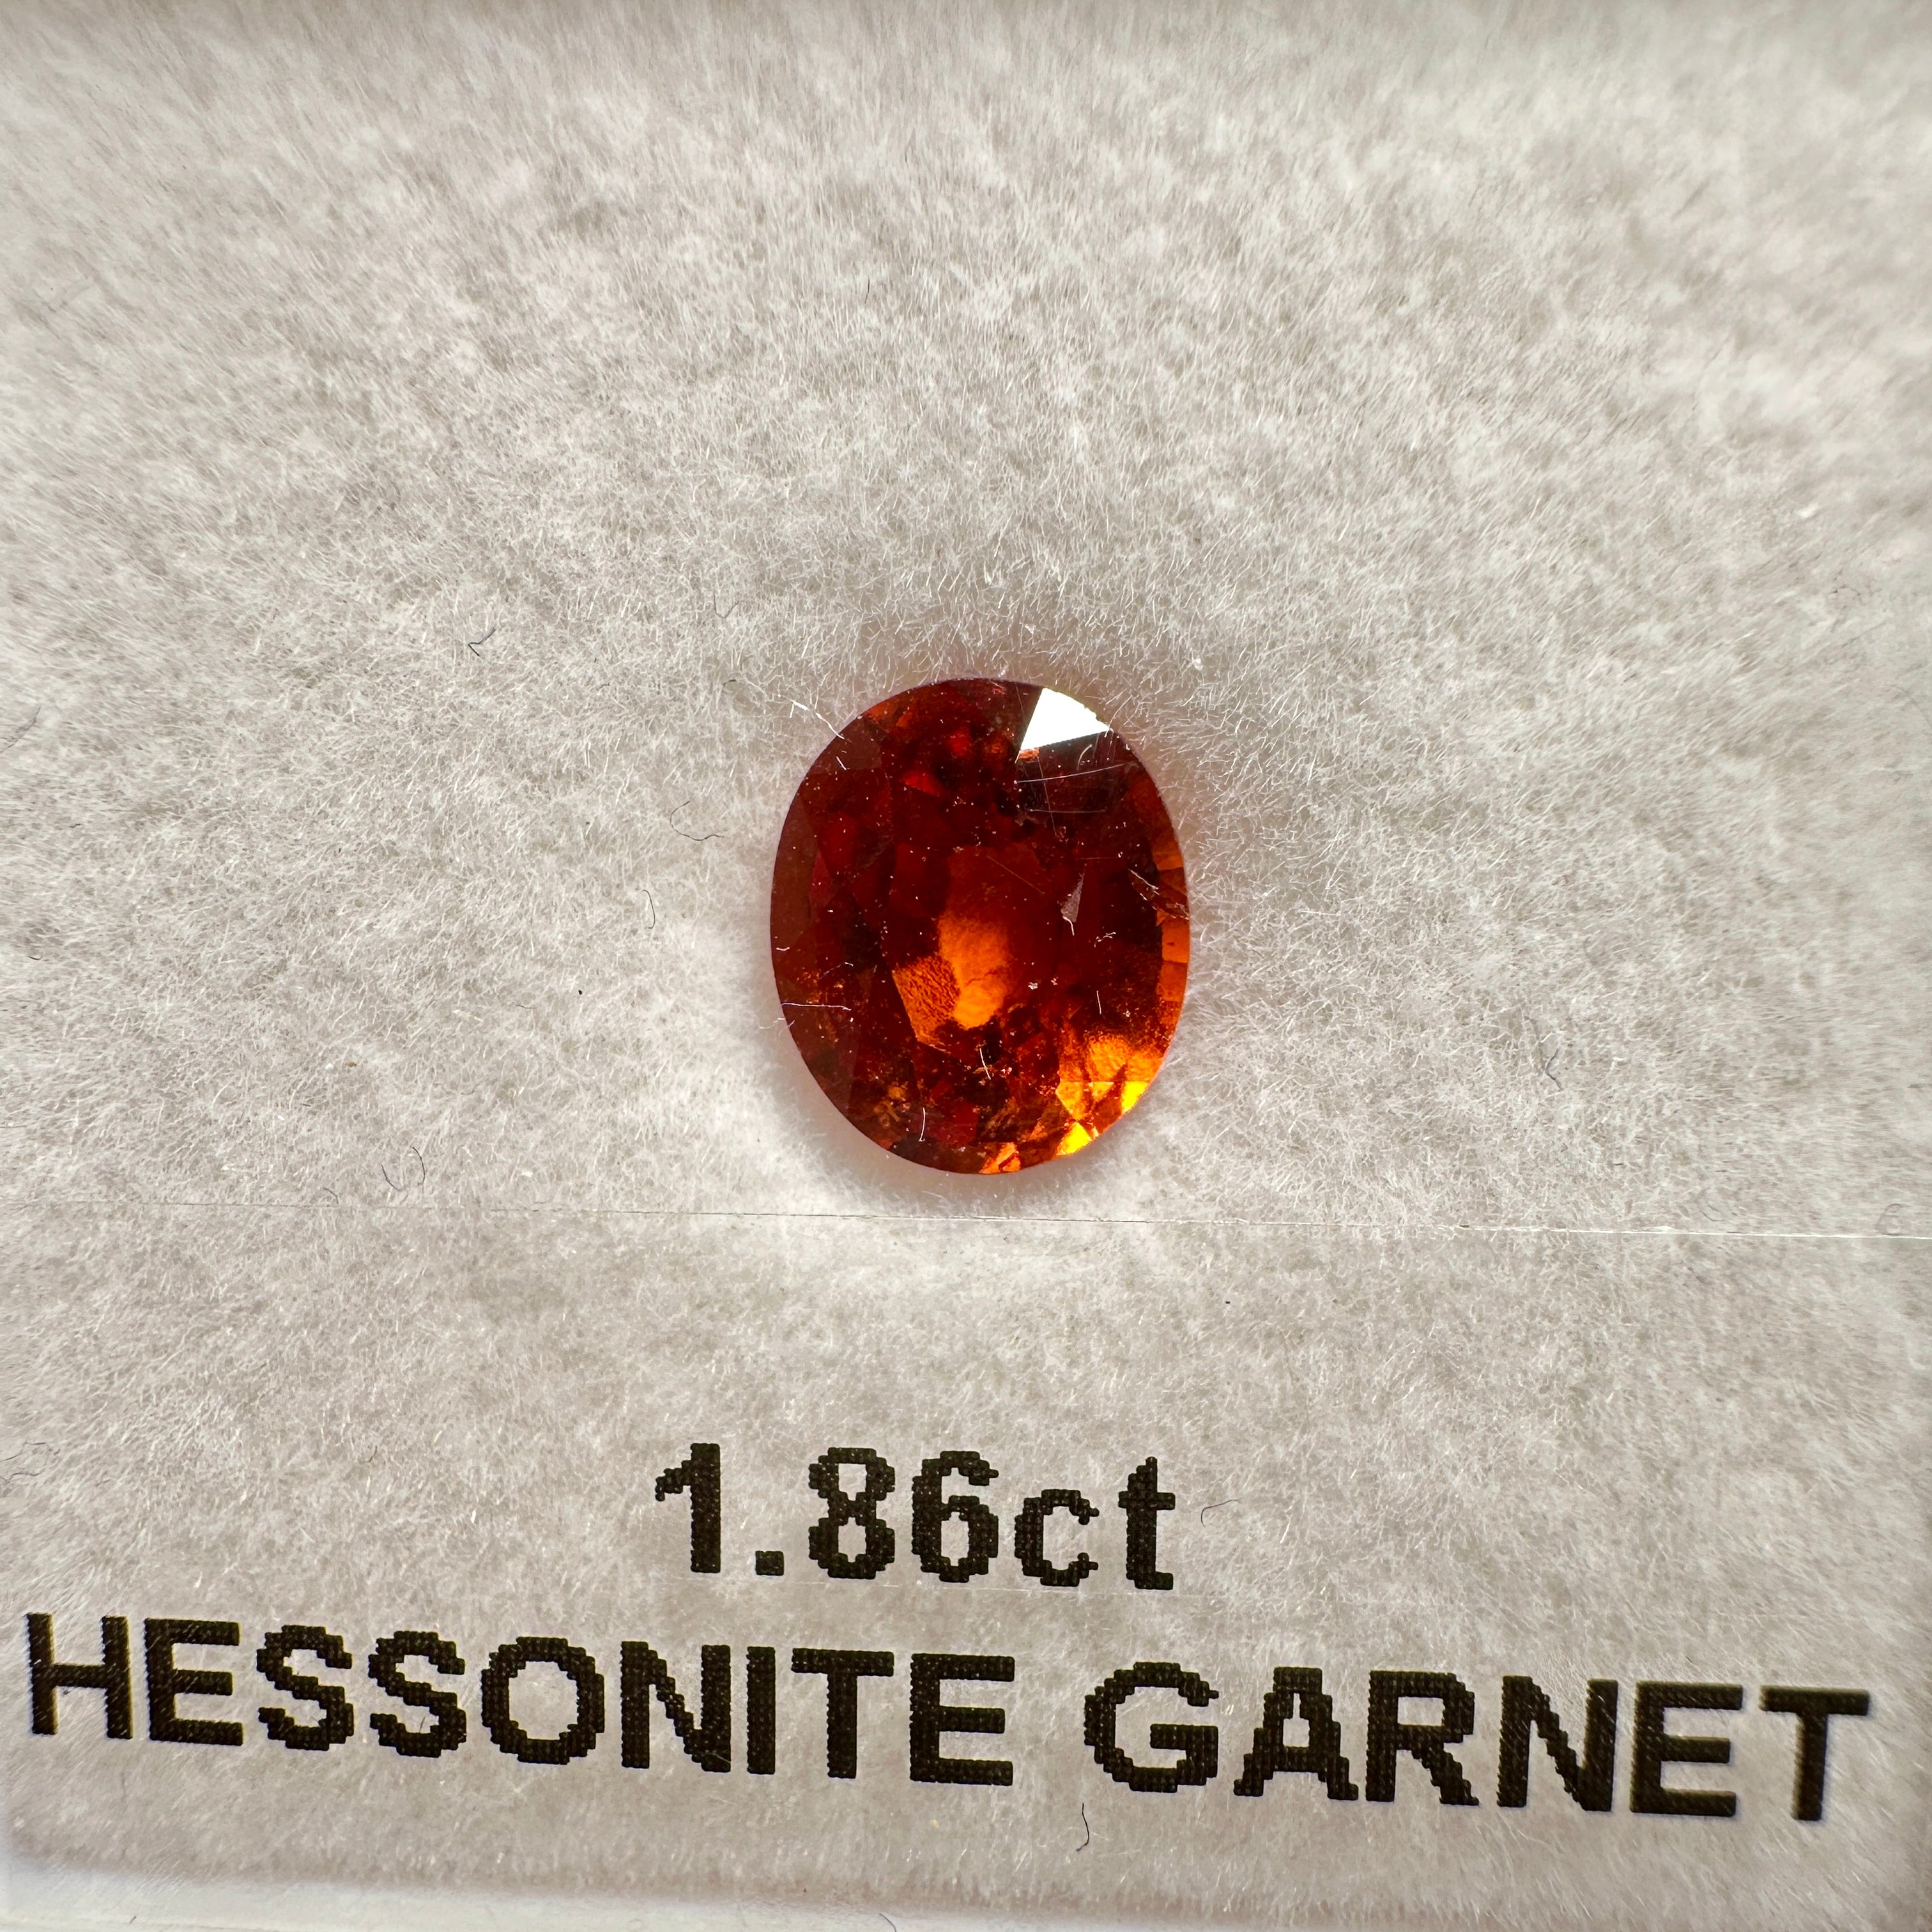 1.86ct Hessonite Garnet, Untreated Unheated, native cut